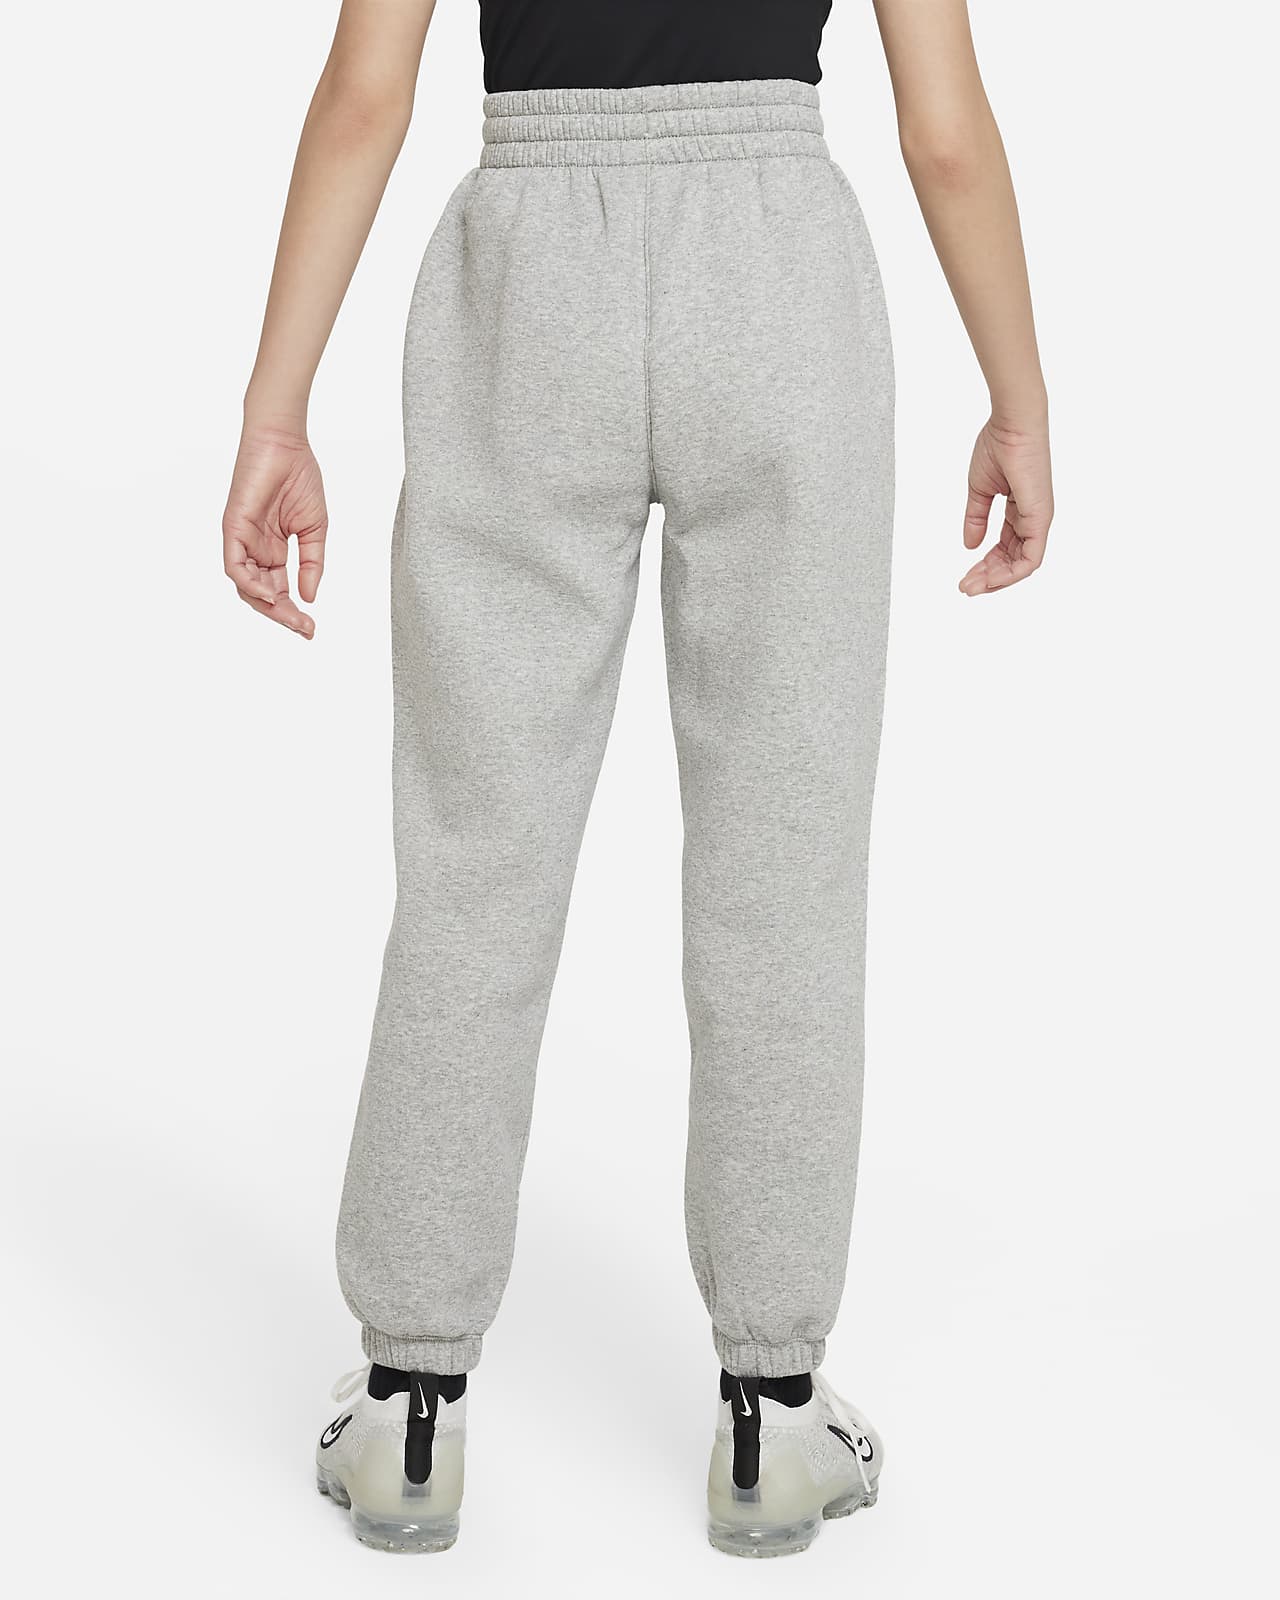 Nike Club Fleece Sportswear Men's Jogger Pants Grey/White 804408-063